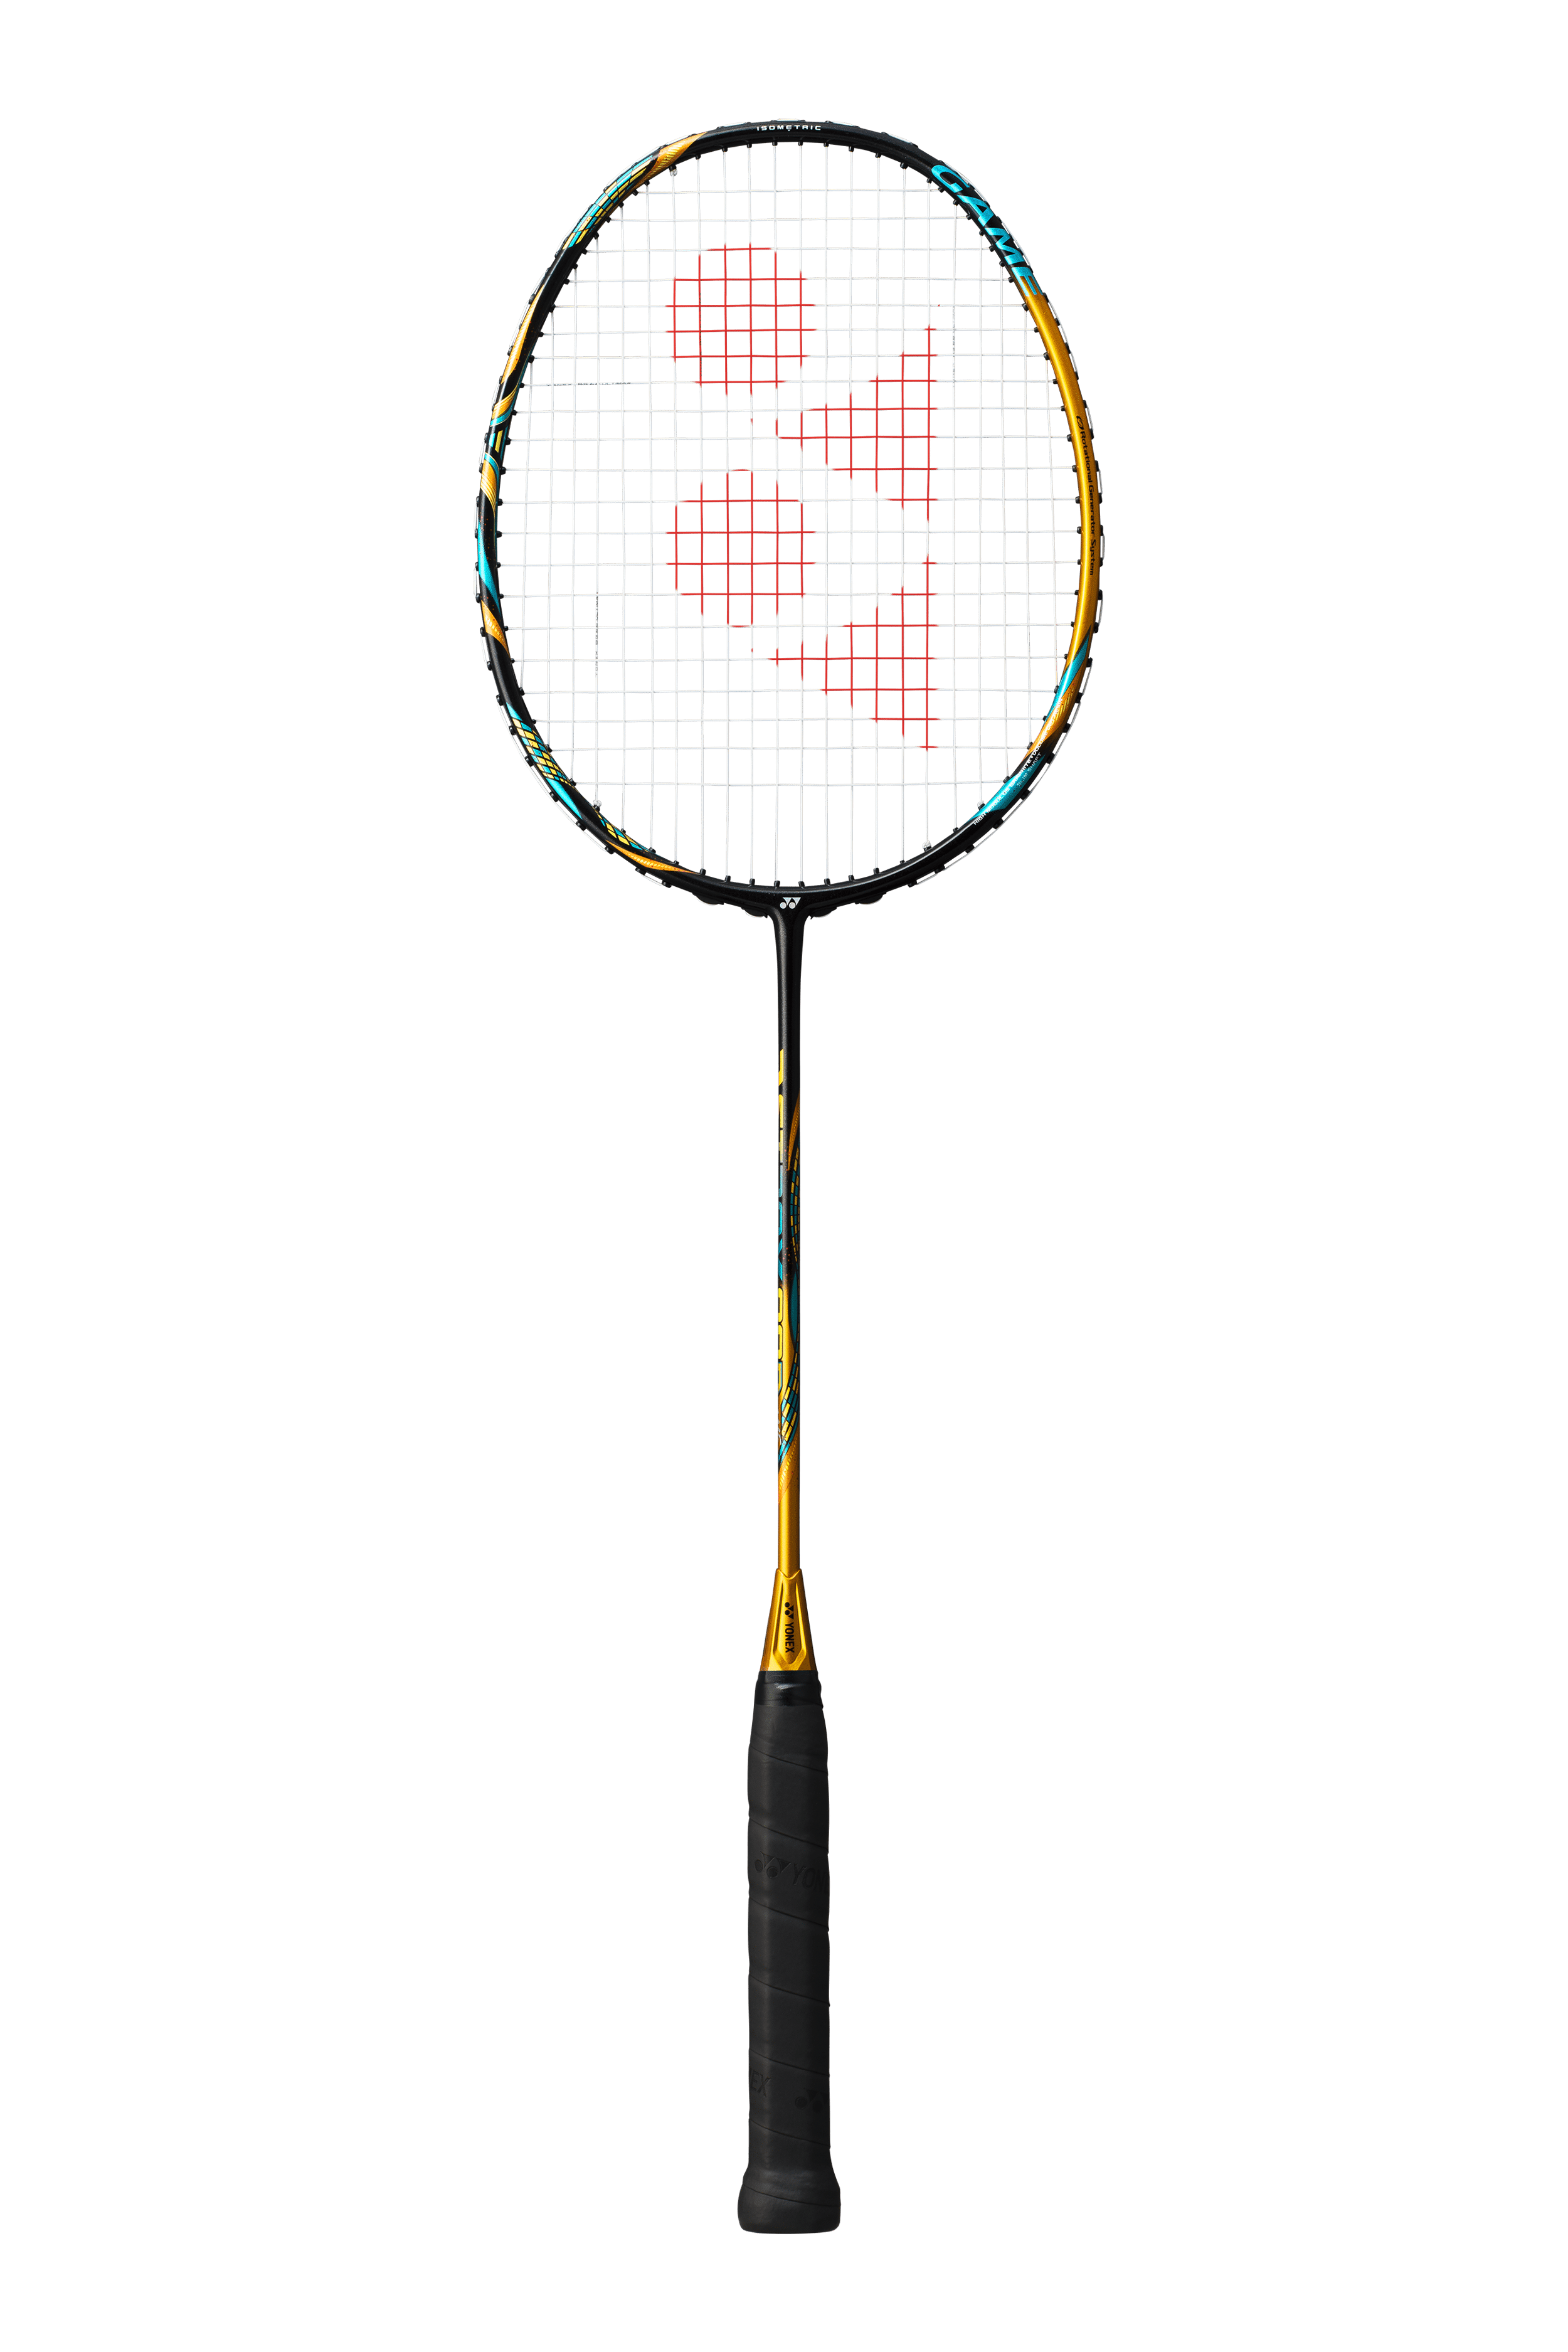 2pcs Portable Kids Badminton Racket Toy with VGEBY1 Inflatable Badminton Racket 